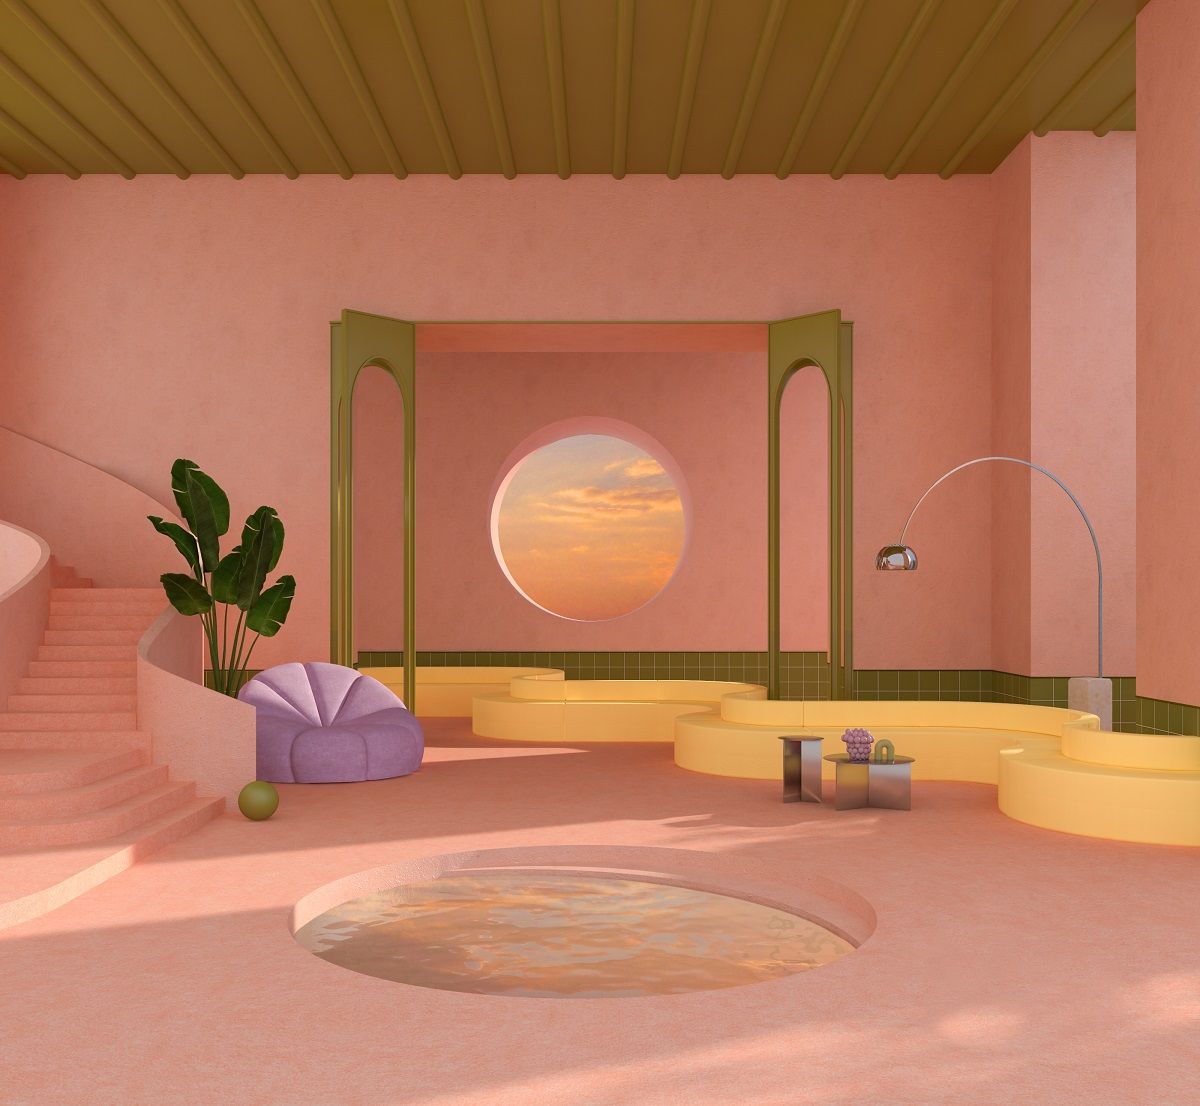 Disorienting Design: 14 Trippy & Surreal Interior Spaces - WebUrbanist